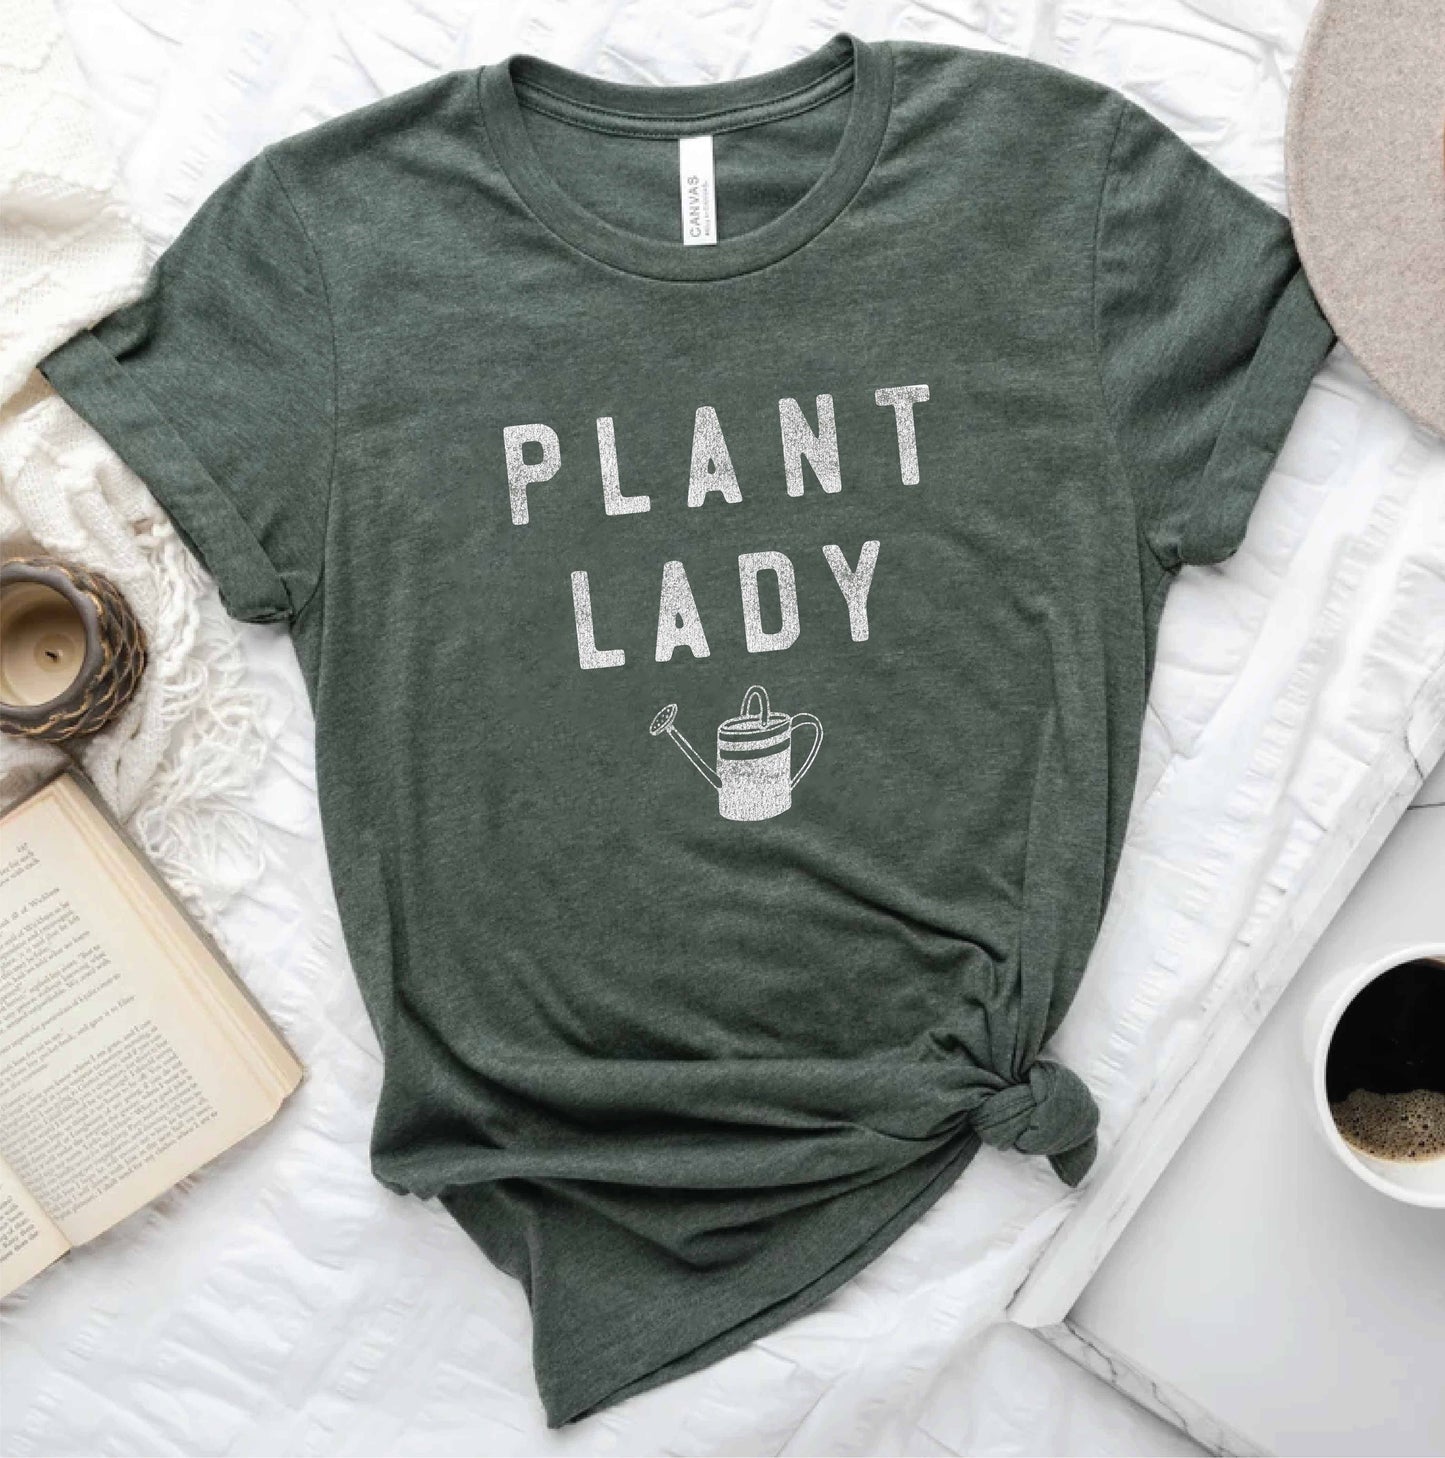 PLANT LADY Graphic T-Shirt